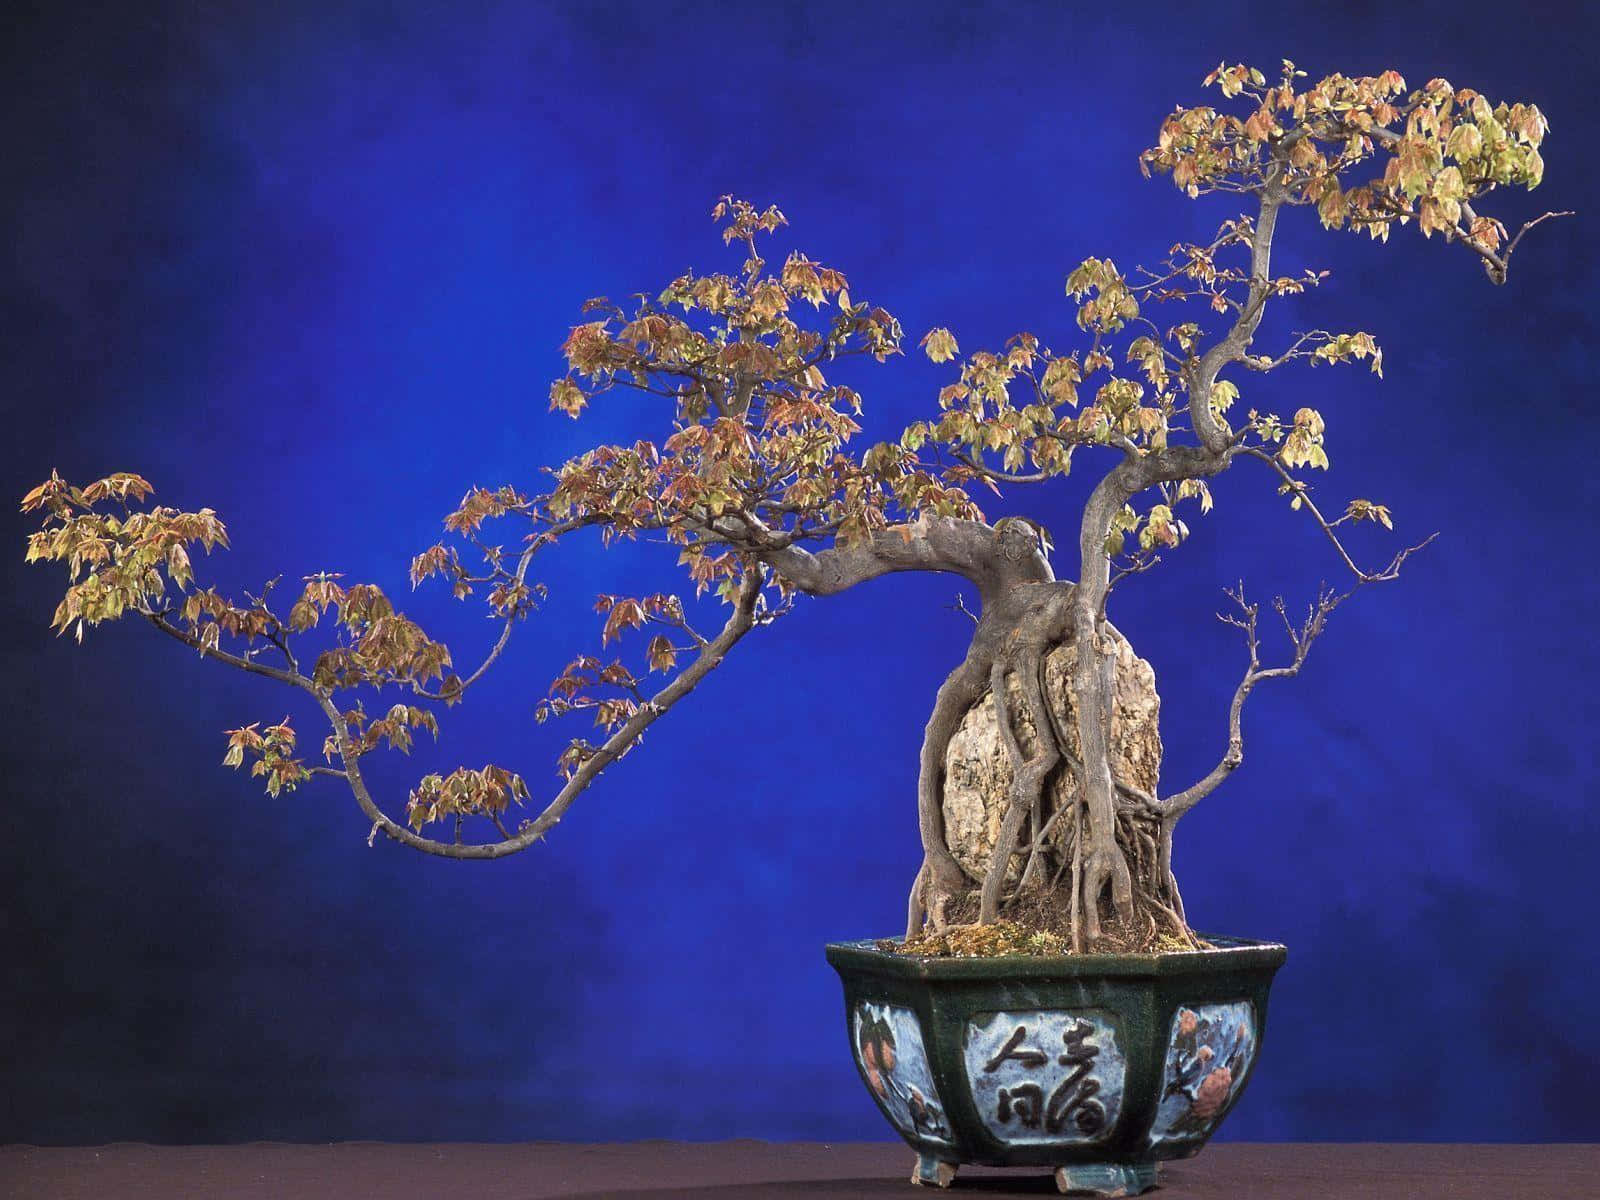 A Bonsai Tree In A Blue Pot